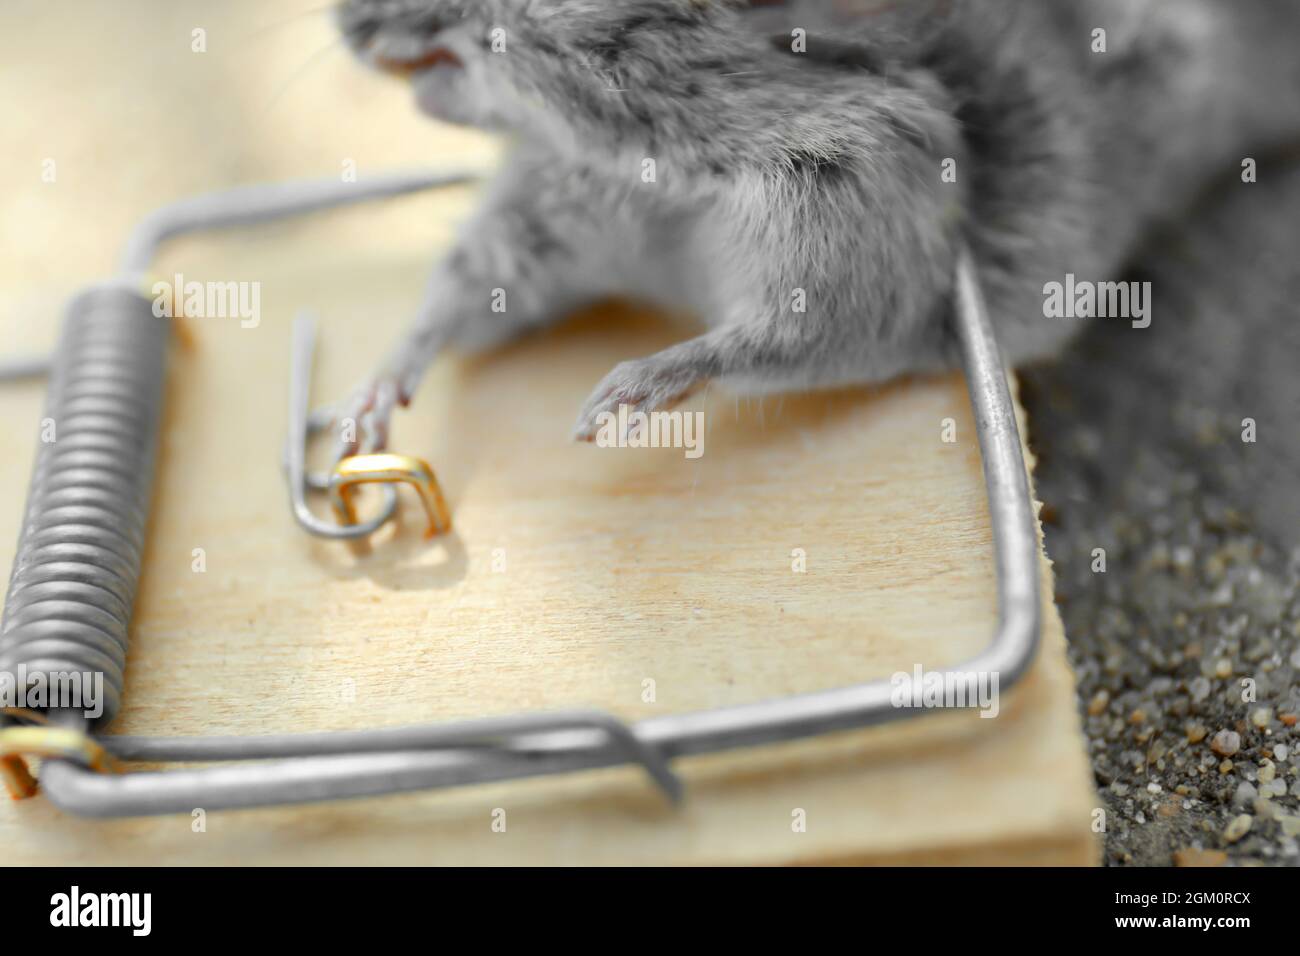 https://c8.alamy.com/comp/2GM0RCX/dead-mouse-caught-in-snap-trap-outdoors-closeup-2GM0RCX.jpg